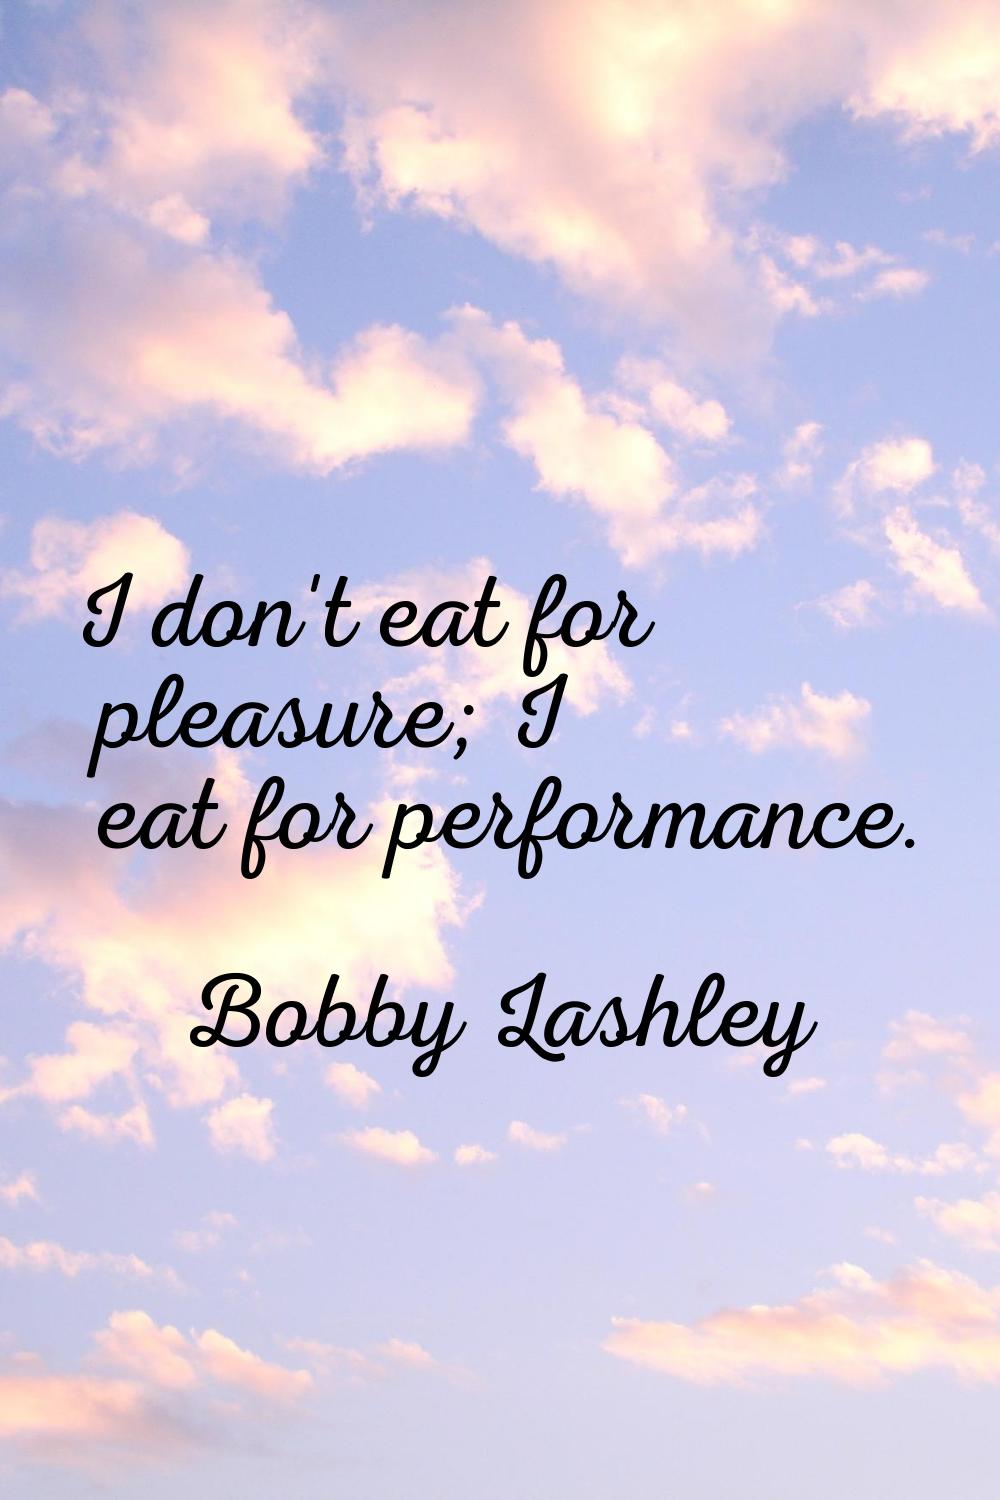 I don't eat for pleasure; I eat for performance.